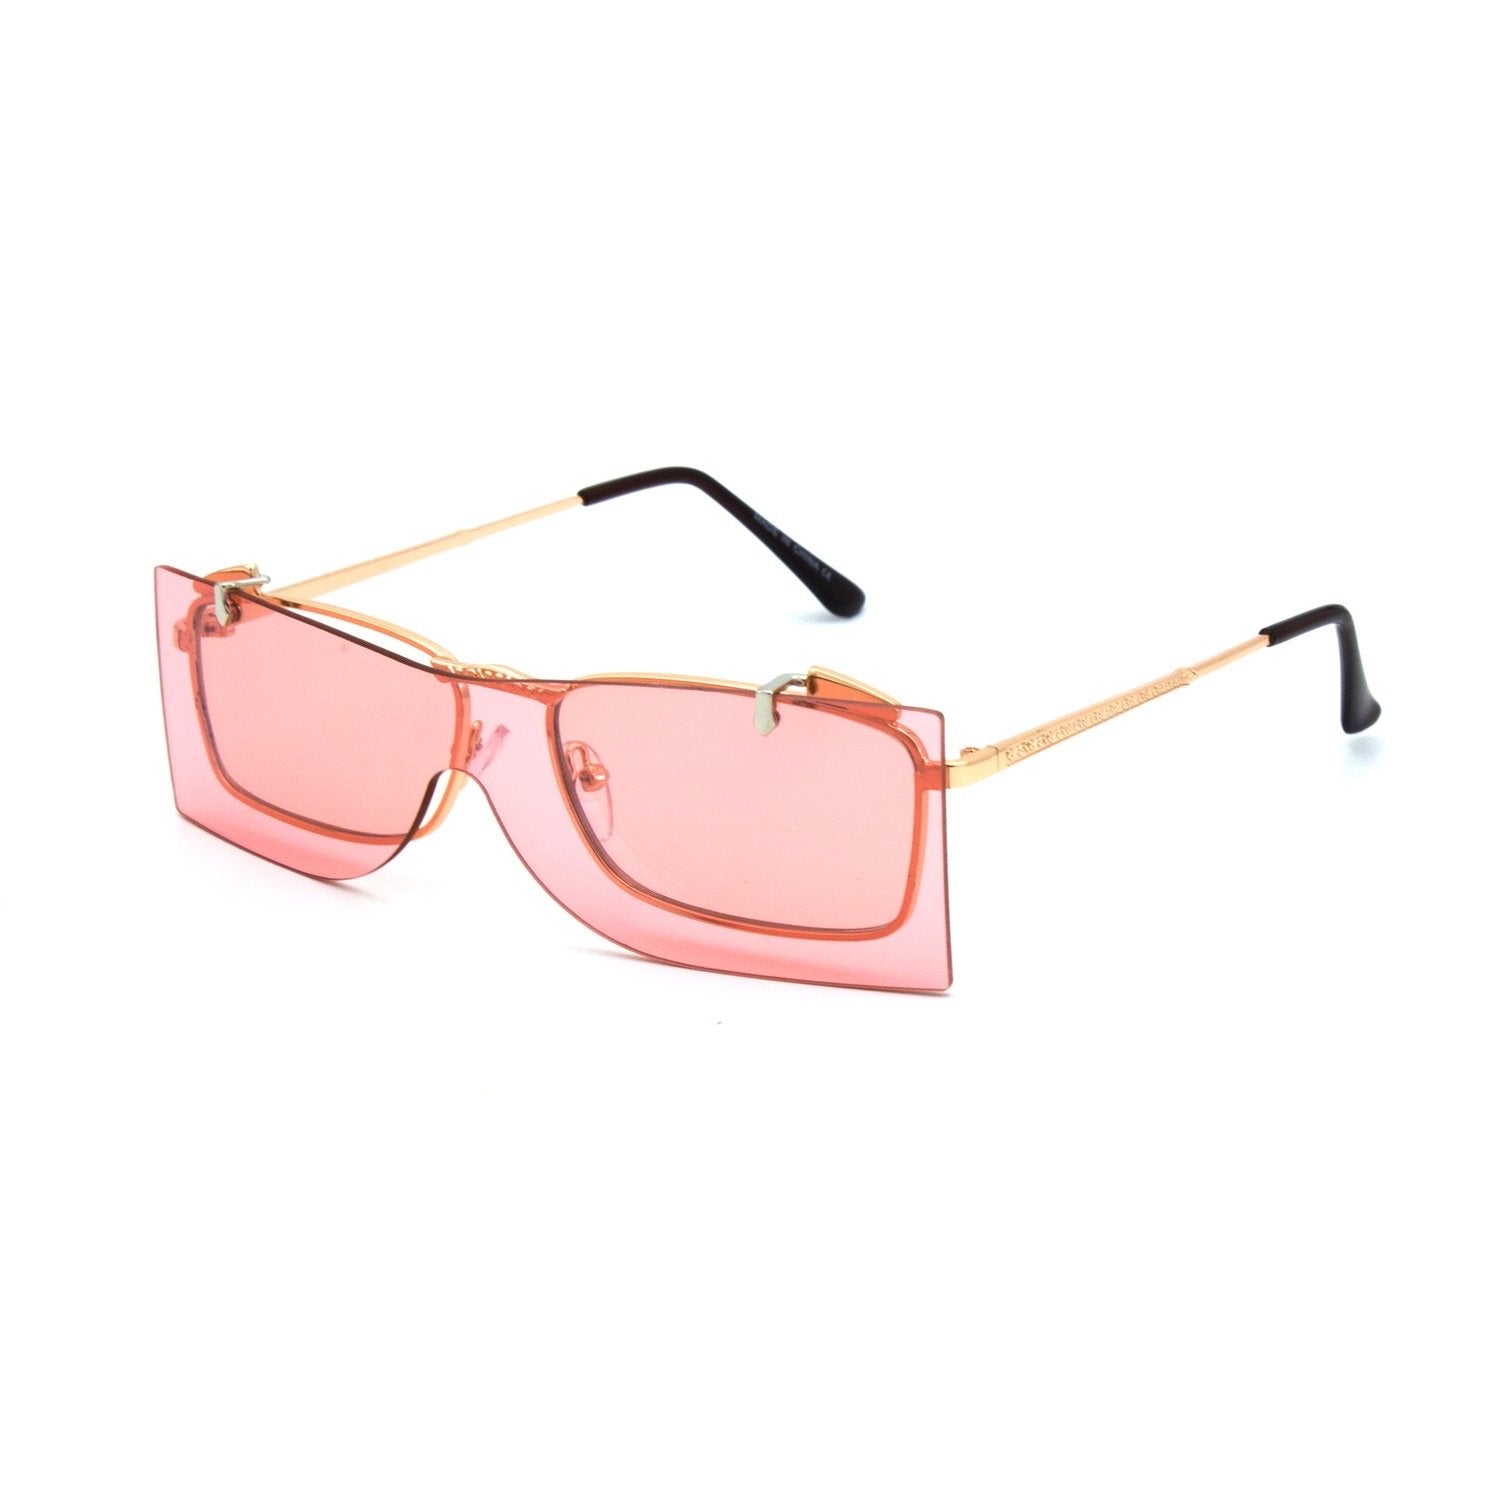 “BAD GIRLS” Rimless Sunglasses - Weekend Shade Sunglasses